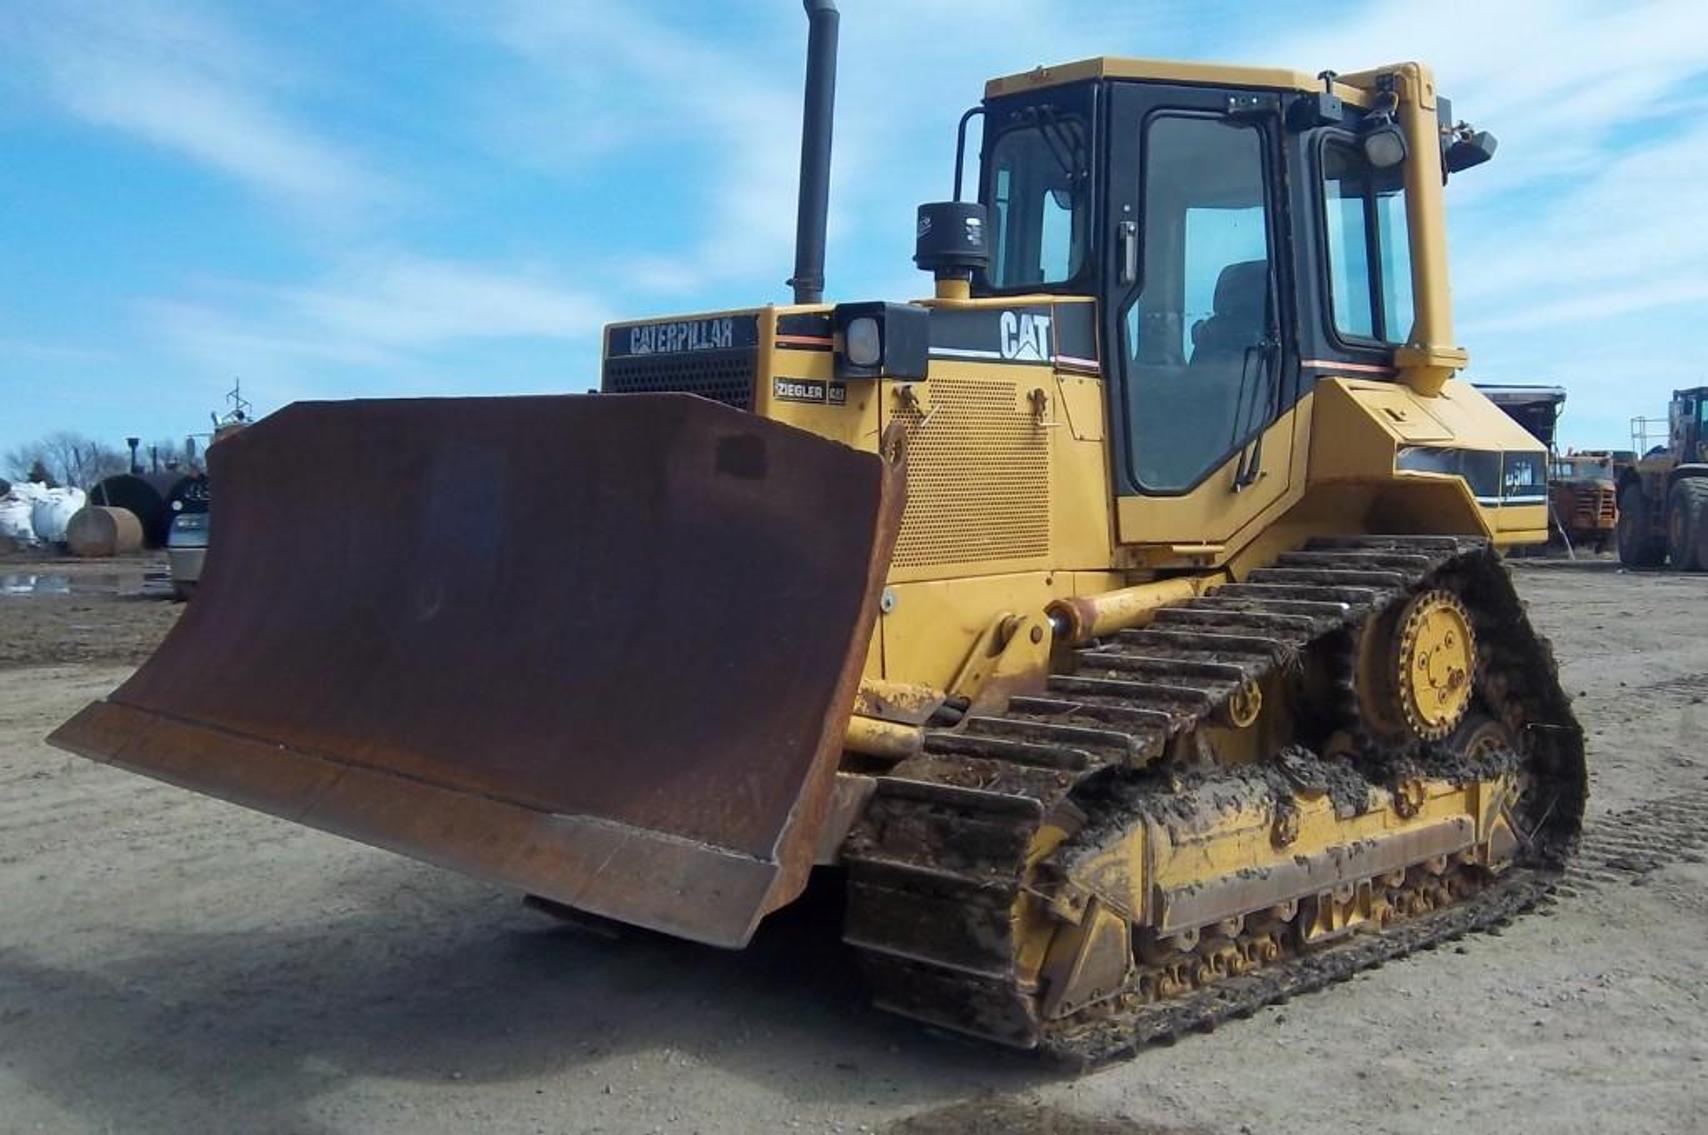 Construction Equipment: Excavators, Dozer, Trucks, Packers & More